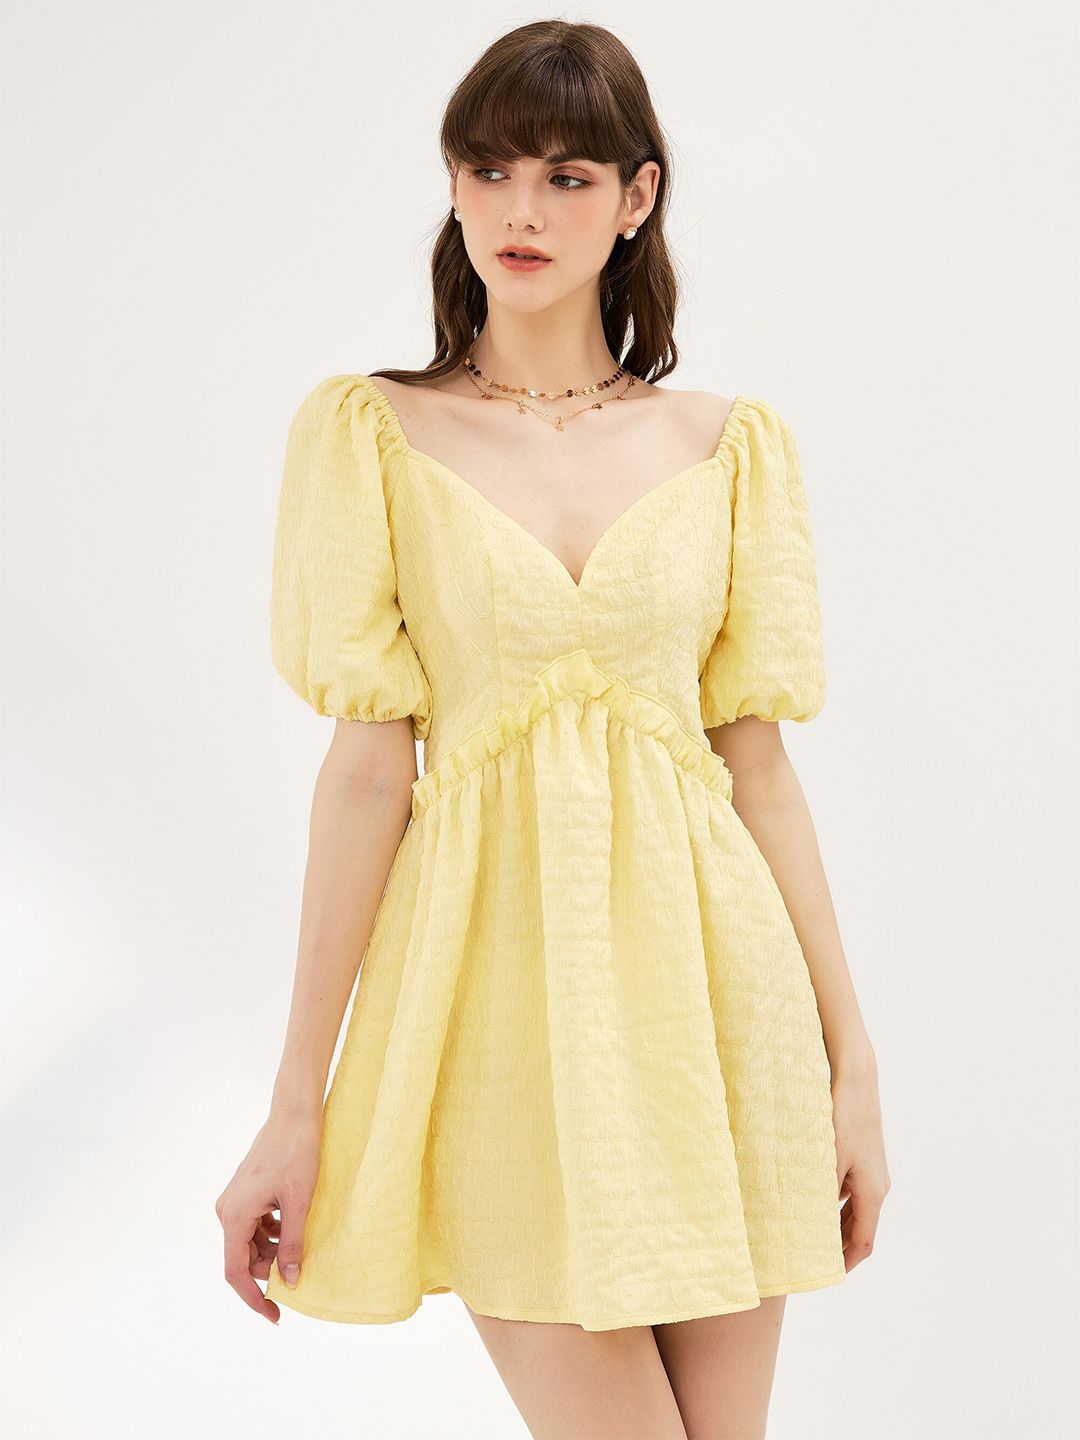 URBANIC Yellow Empire Mini Dress Price in India